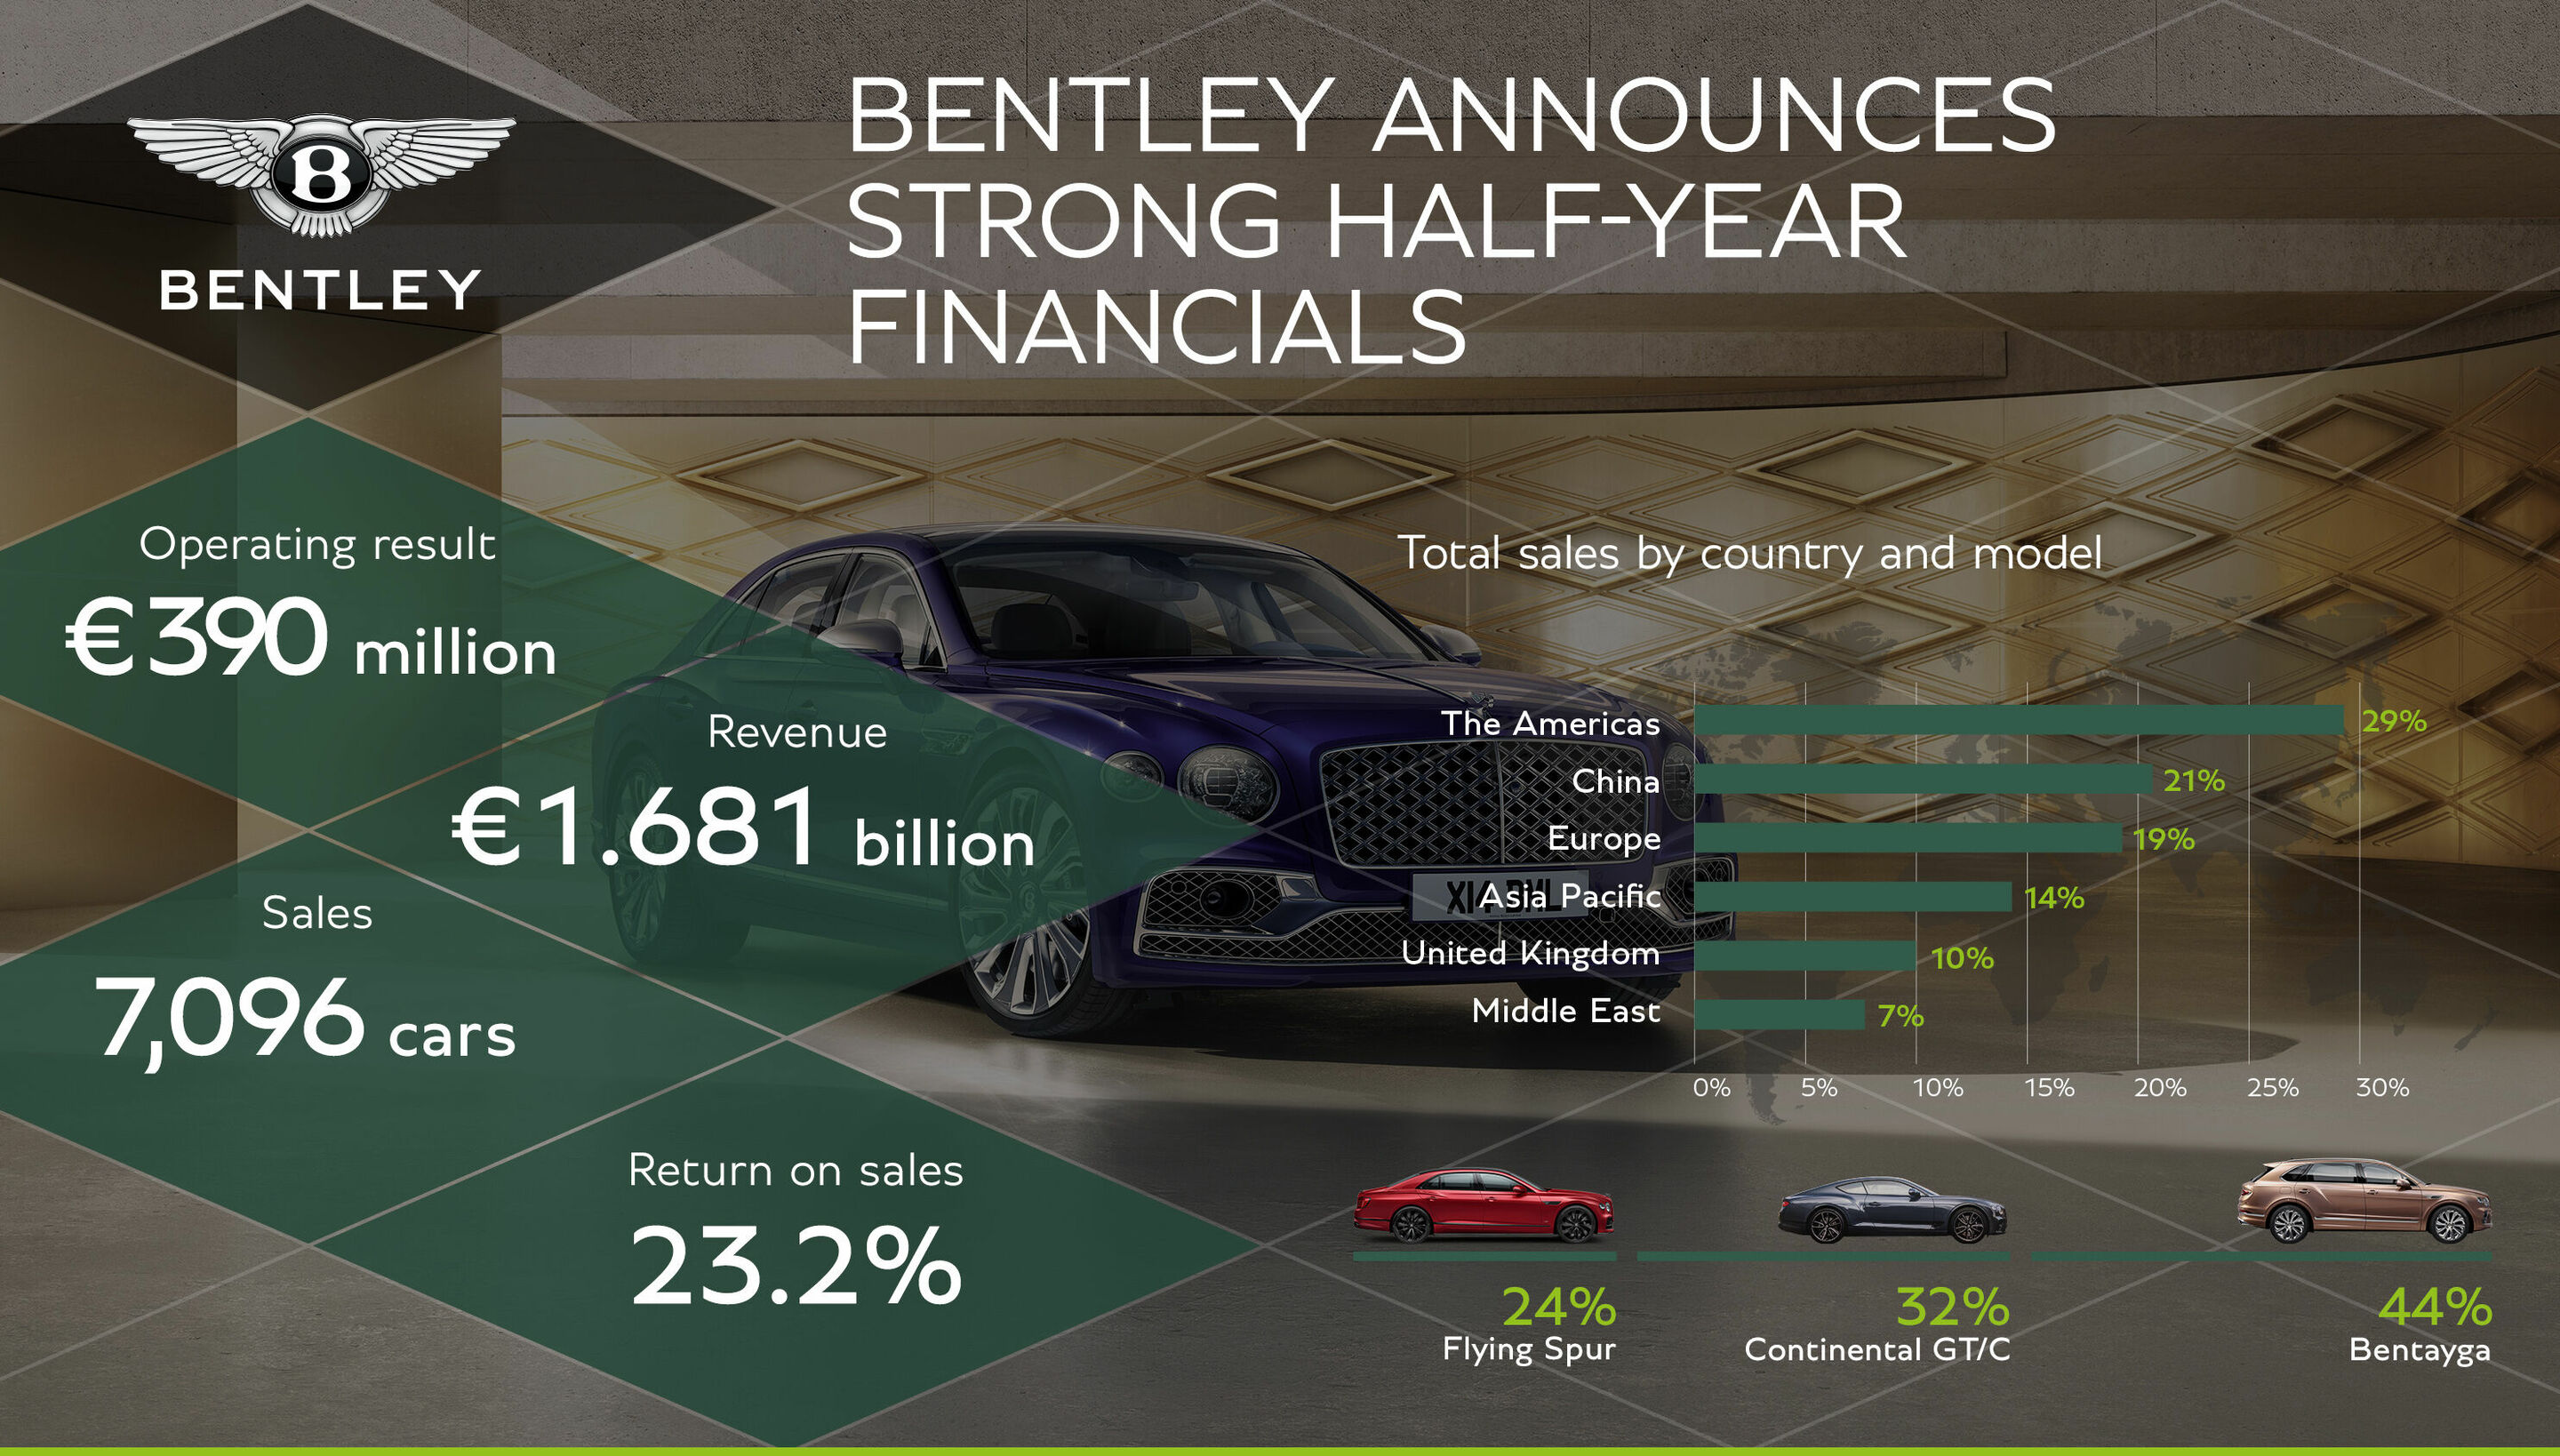 Bentley announces strong half-year financials